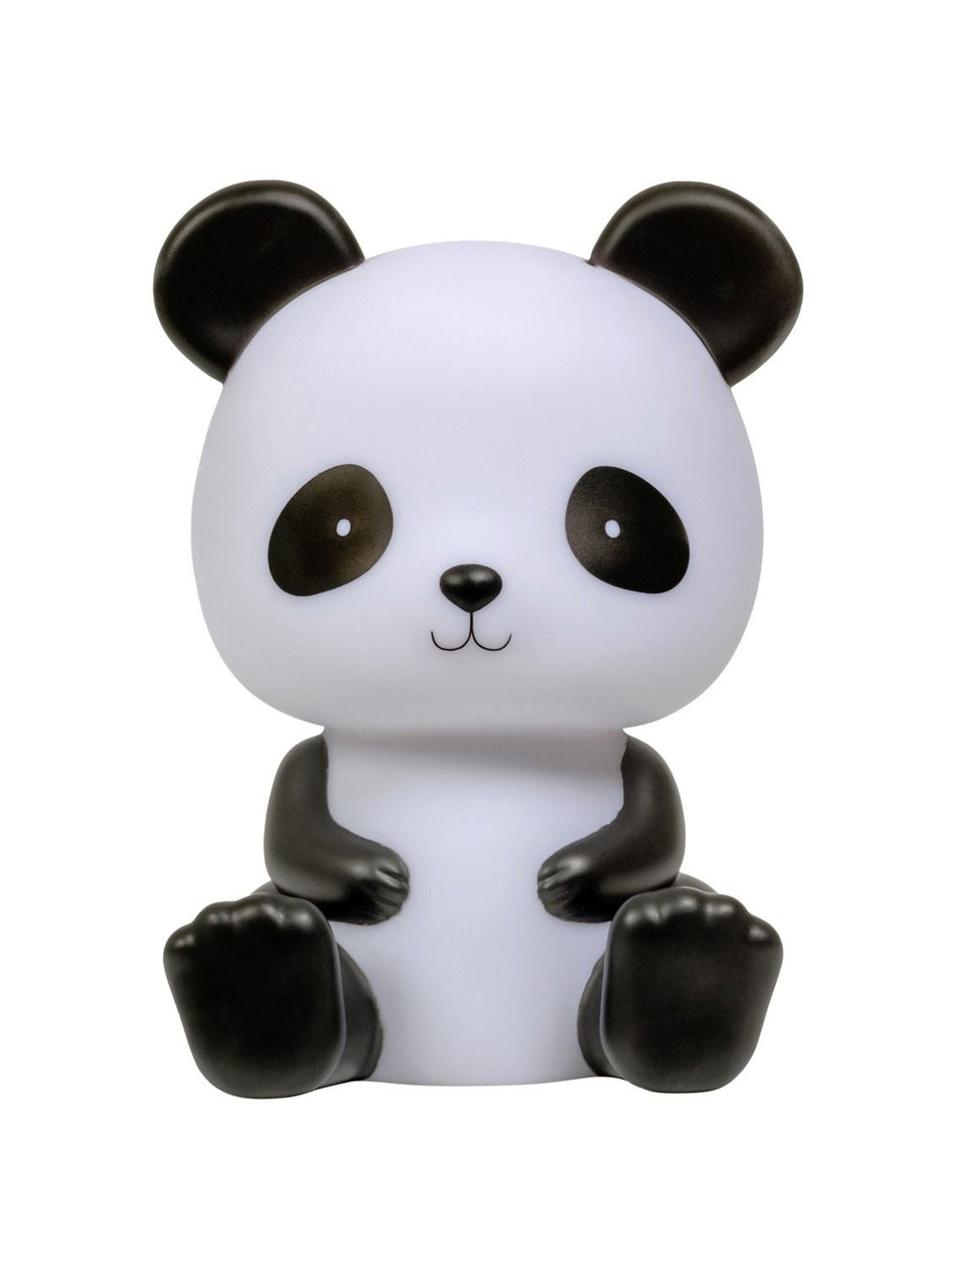 LED lichtobject Panda, Kunststof, BPA-, lood- en ftalaatvrij., Wit, zwart, B 12 x H 19 cm